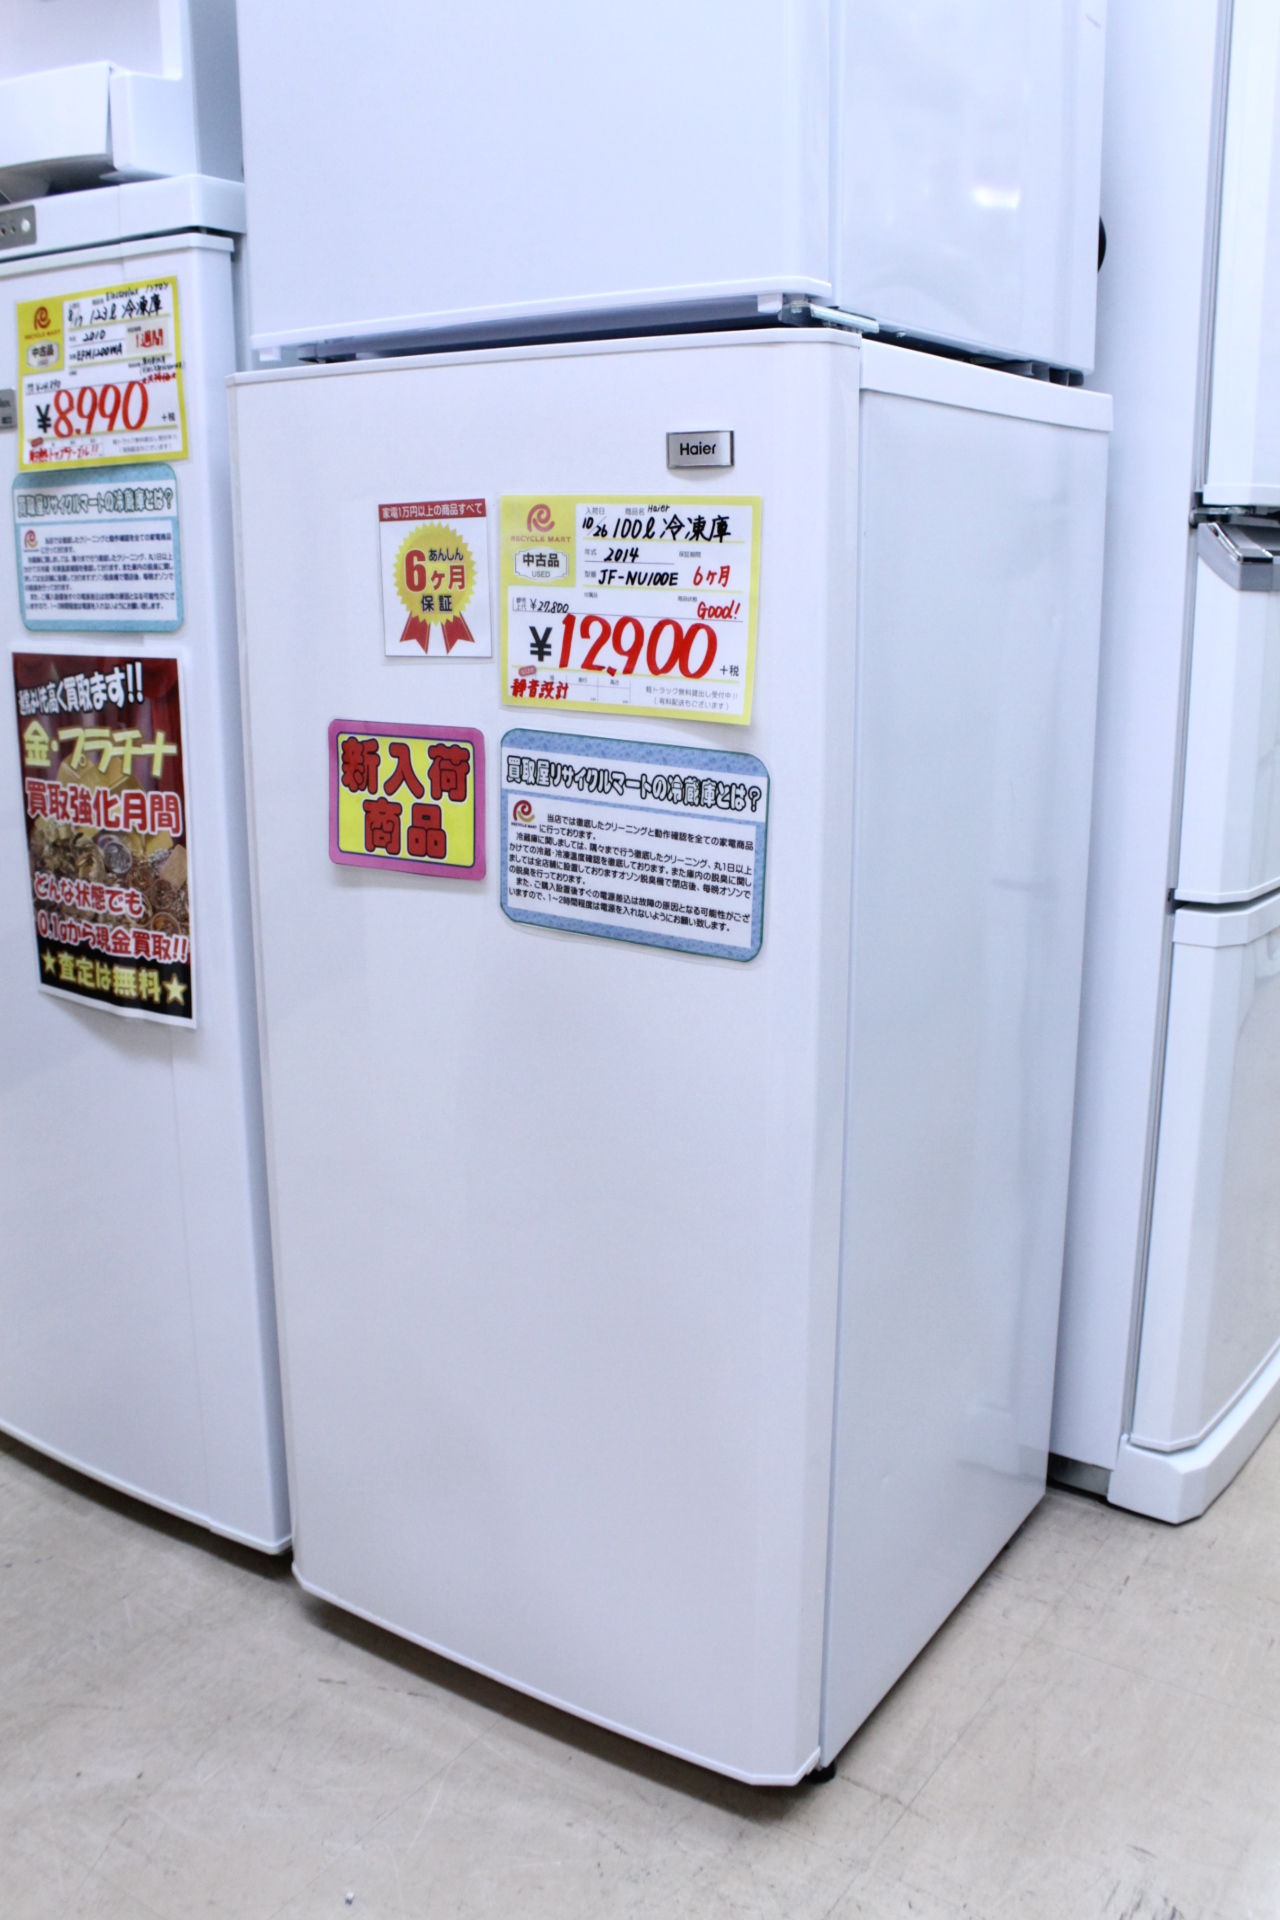 【Haier ハイアール 100L 冷凍庫 2014年製 JF-NU100E 静音設計 】を買取させて頂きました！ - リサイクルマートは現在冷蔵庫の買取、家具の買取強化中です！お気軽にお問い合わせください。